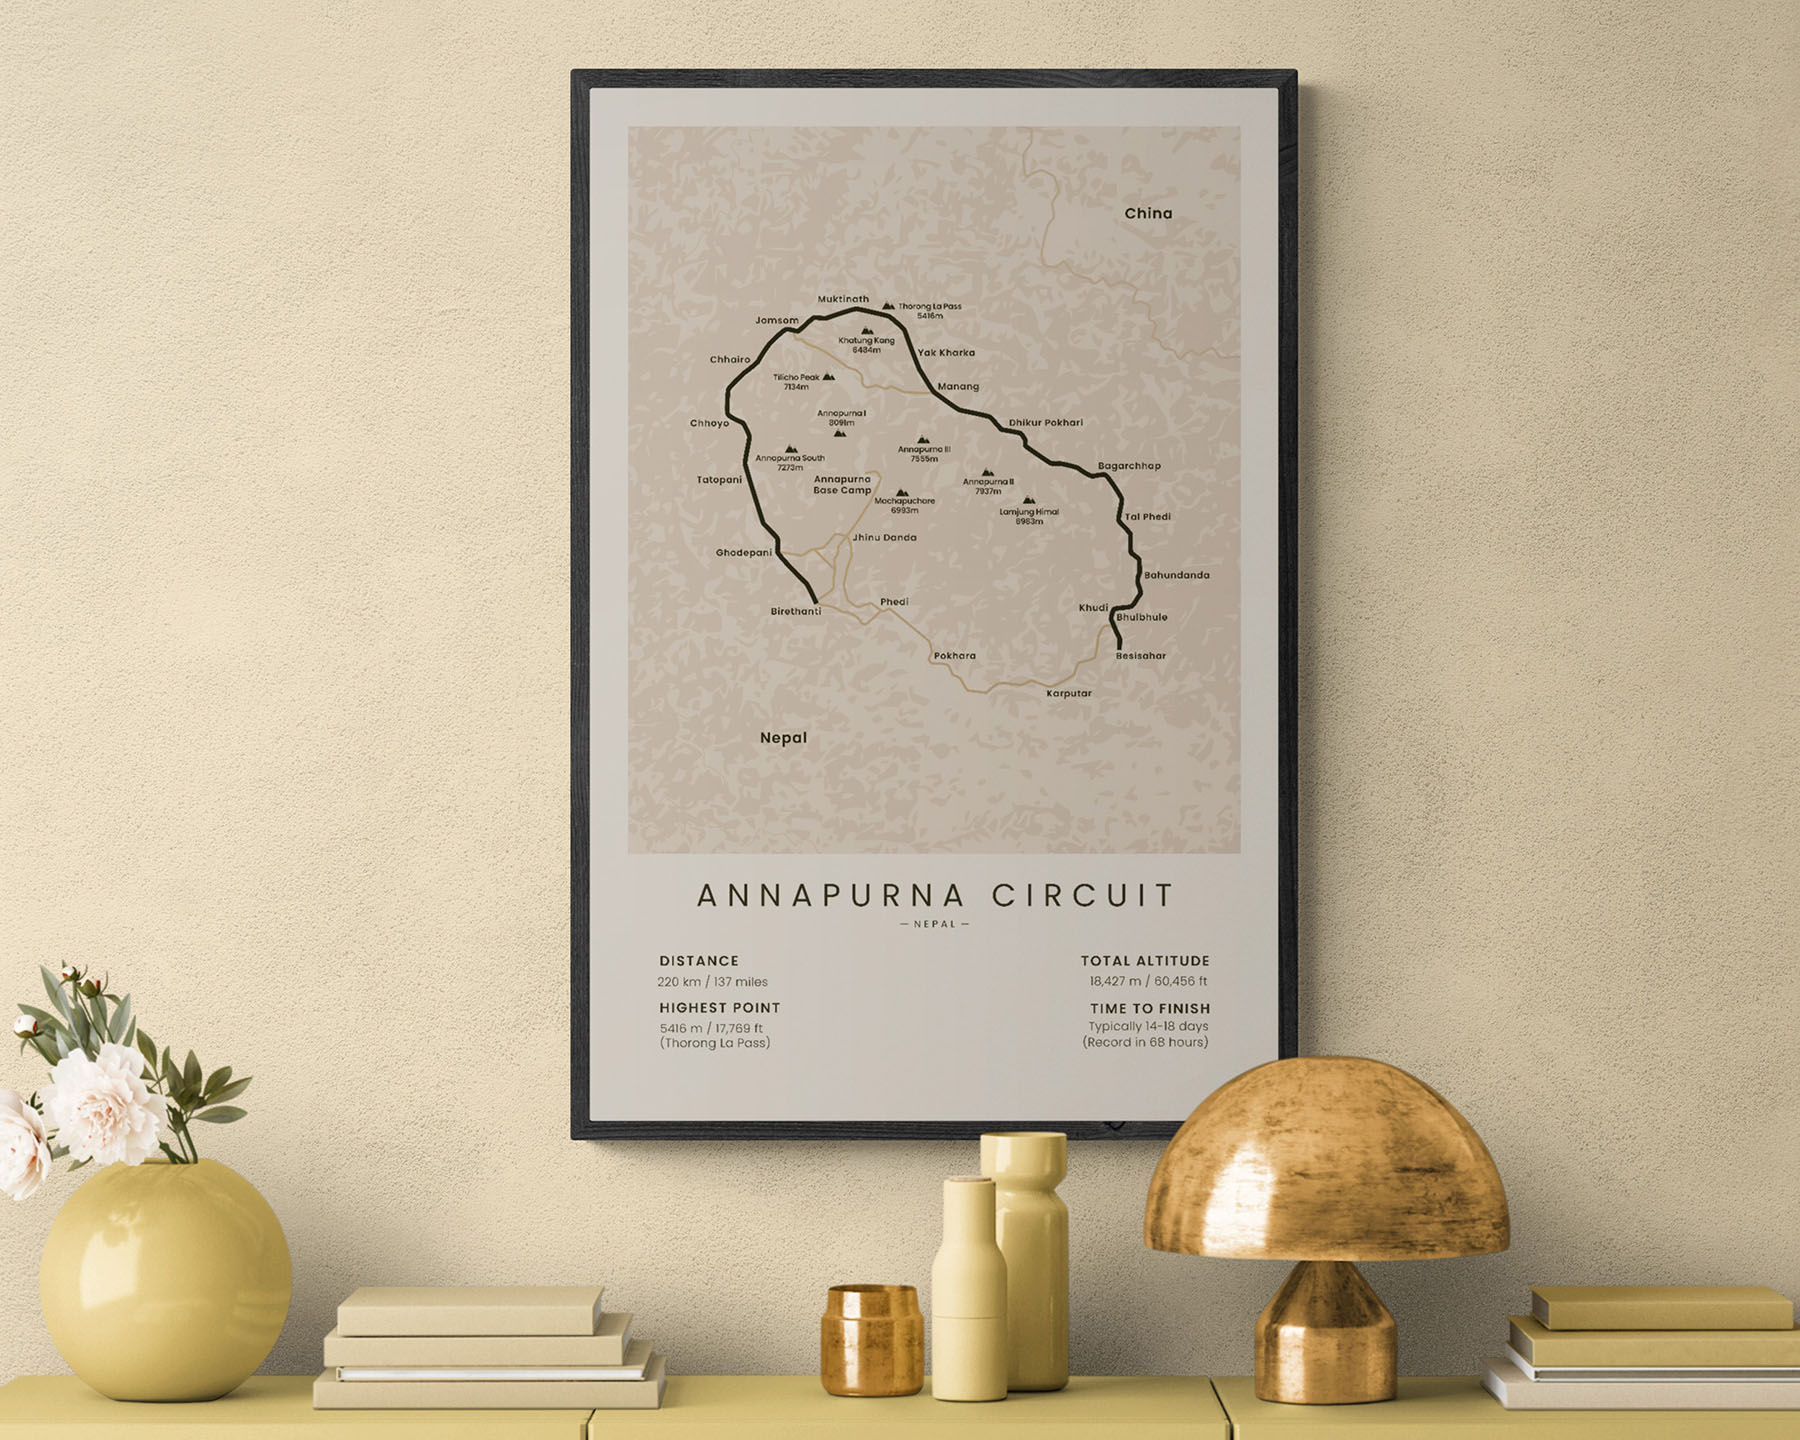 Annapurna Circuit (Nepal) trail poster in minimal room decor